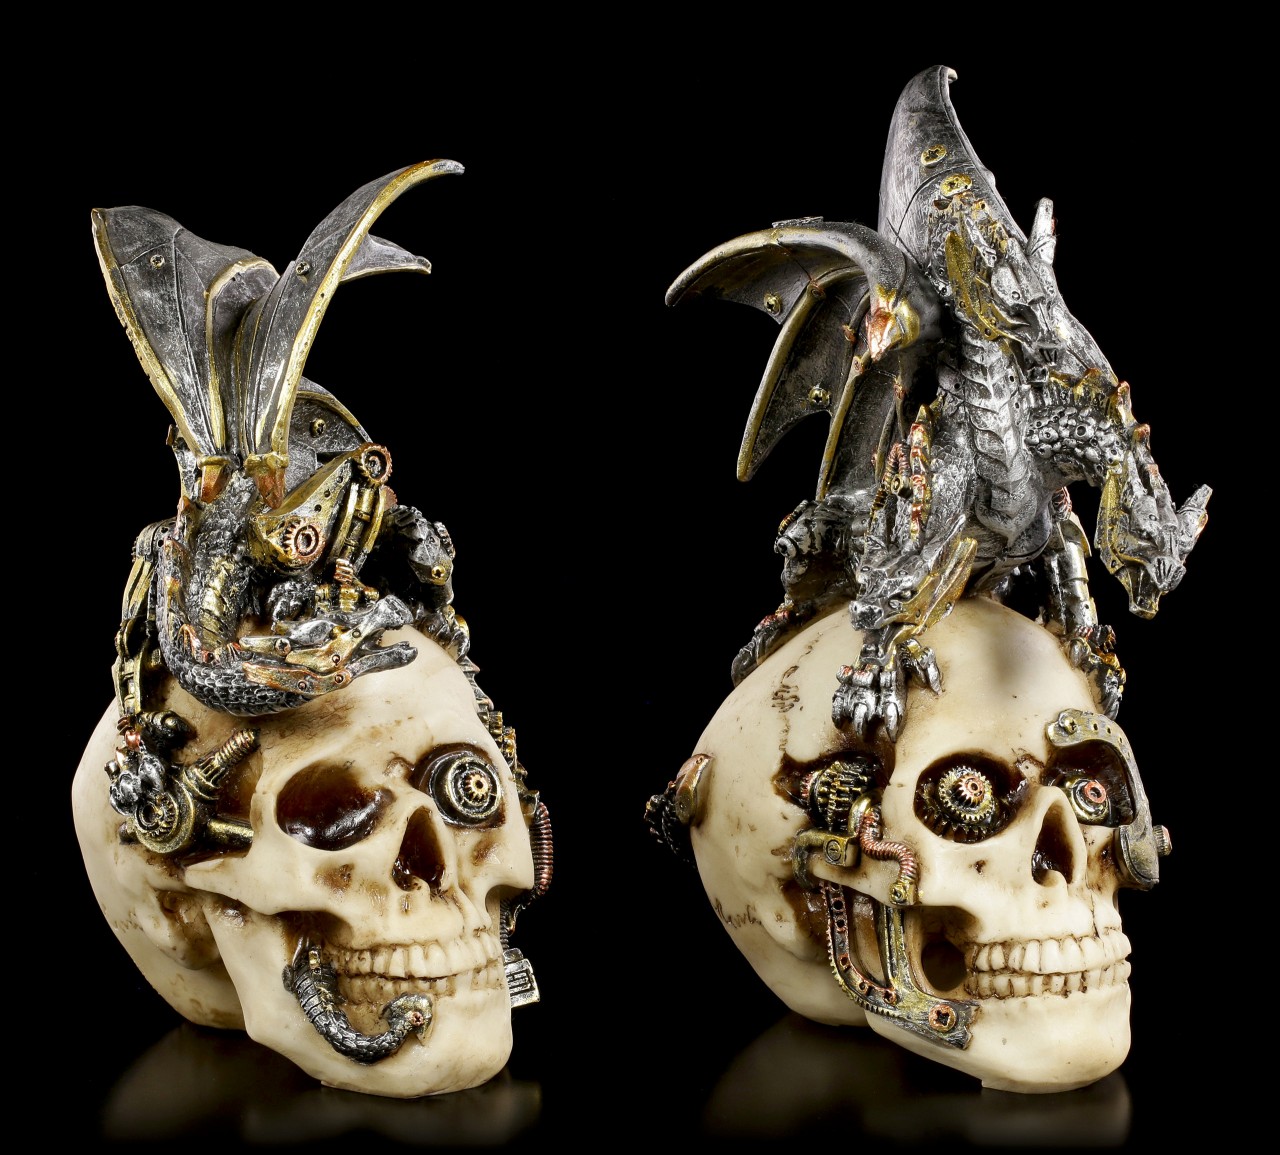 Steampunk Dragons on Skulls Figurines - Set of 2